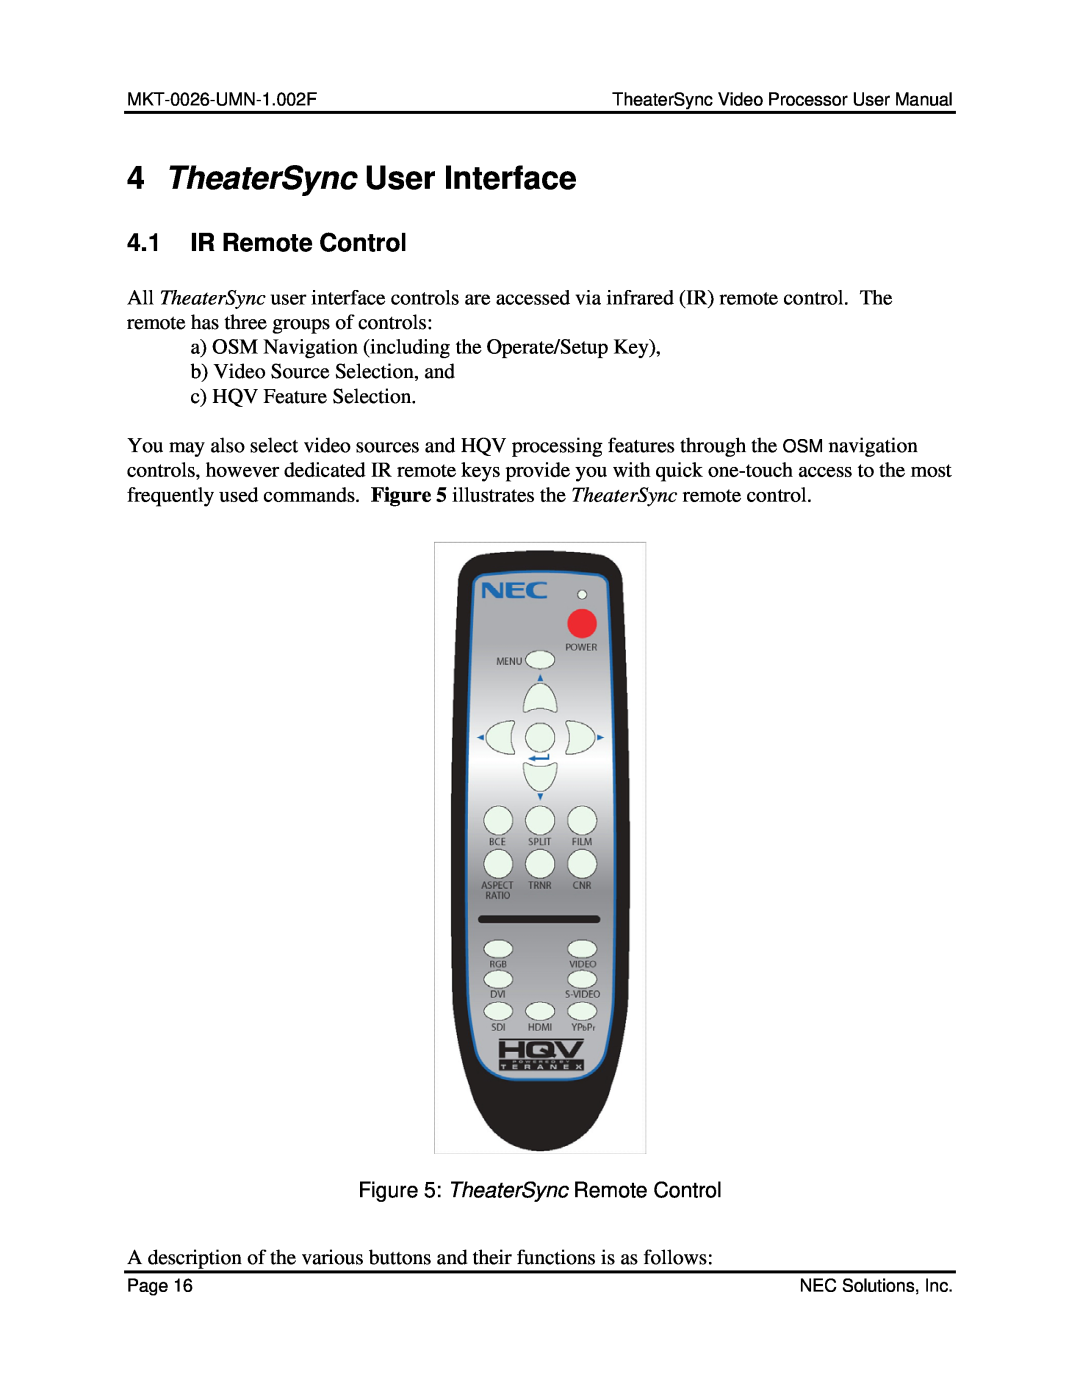 NEC TheaterSync Video Processor user manual TheaterSync User Interface, 4.1IR Remote Control 